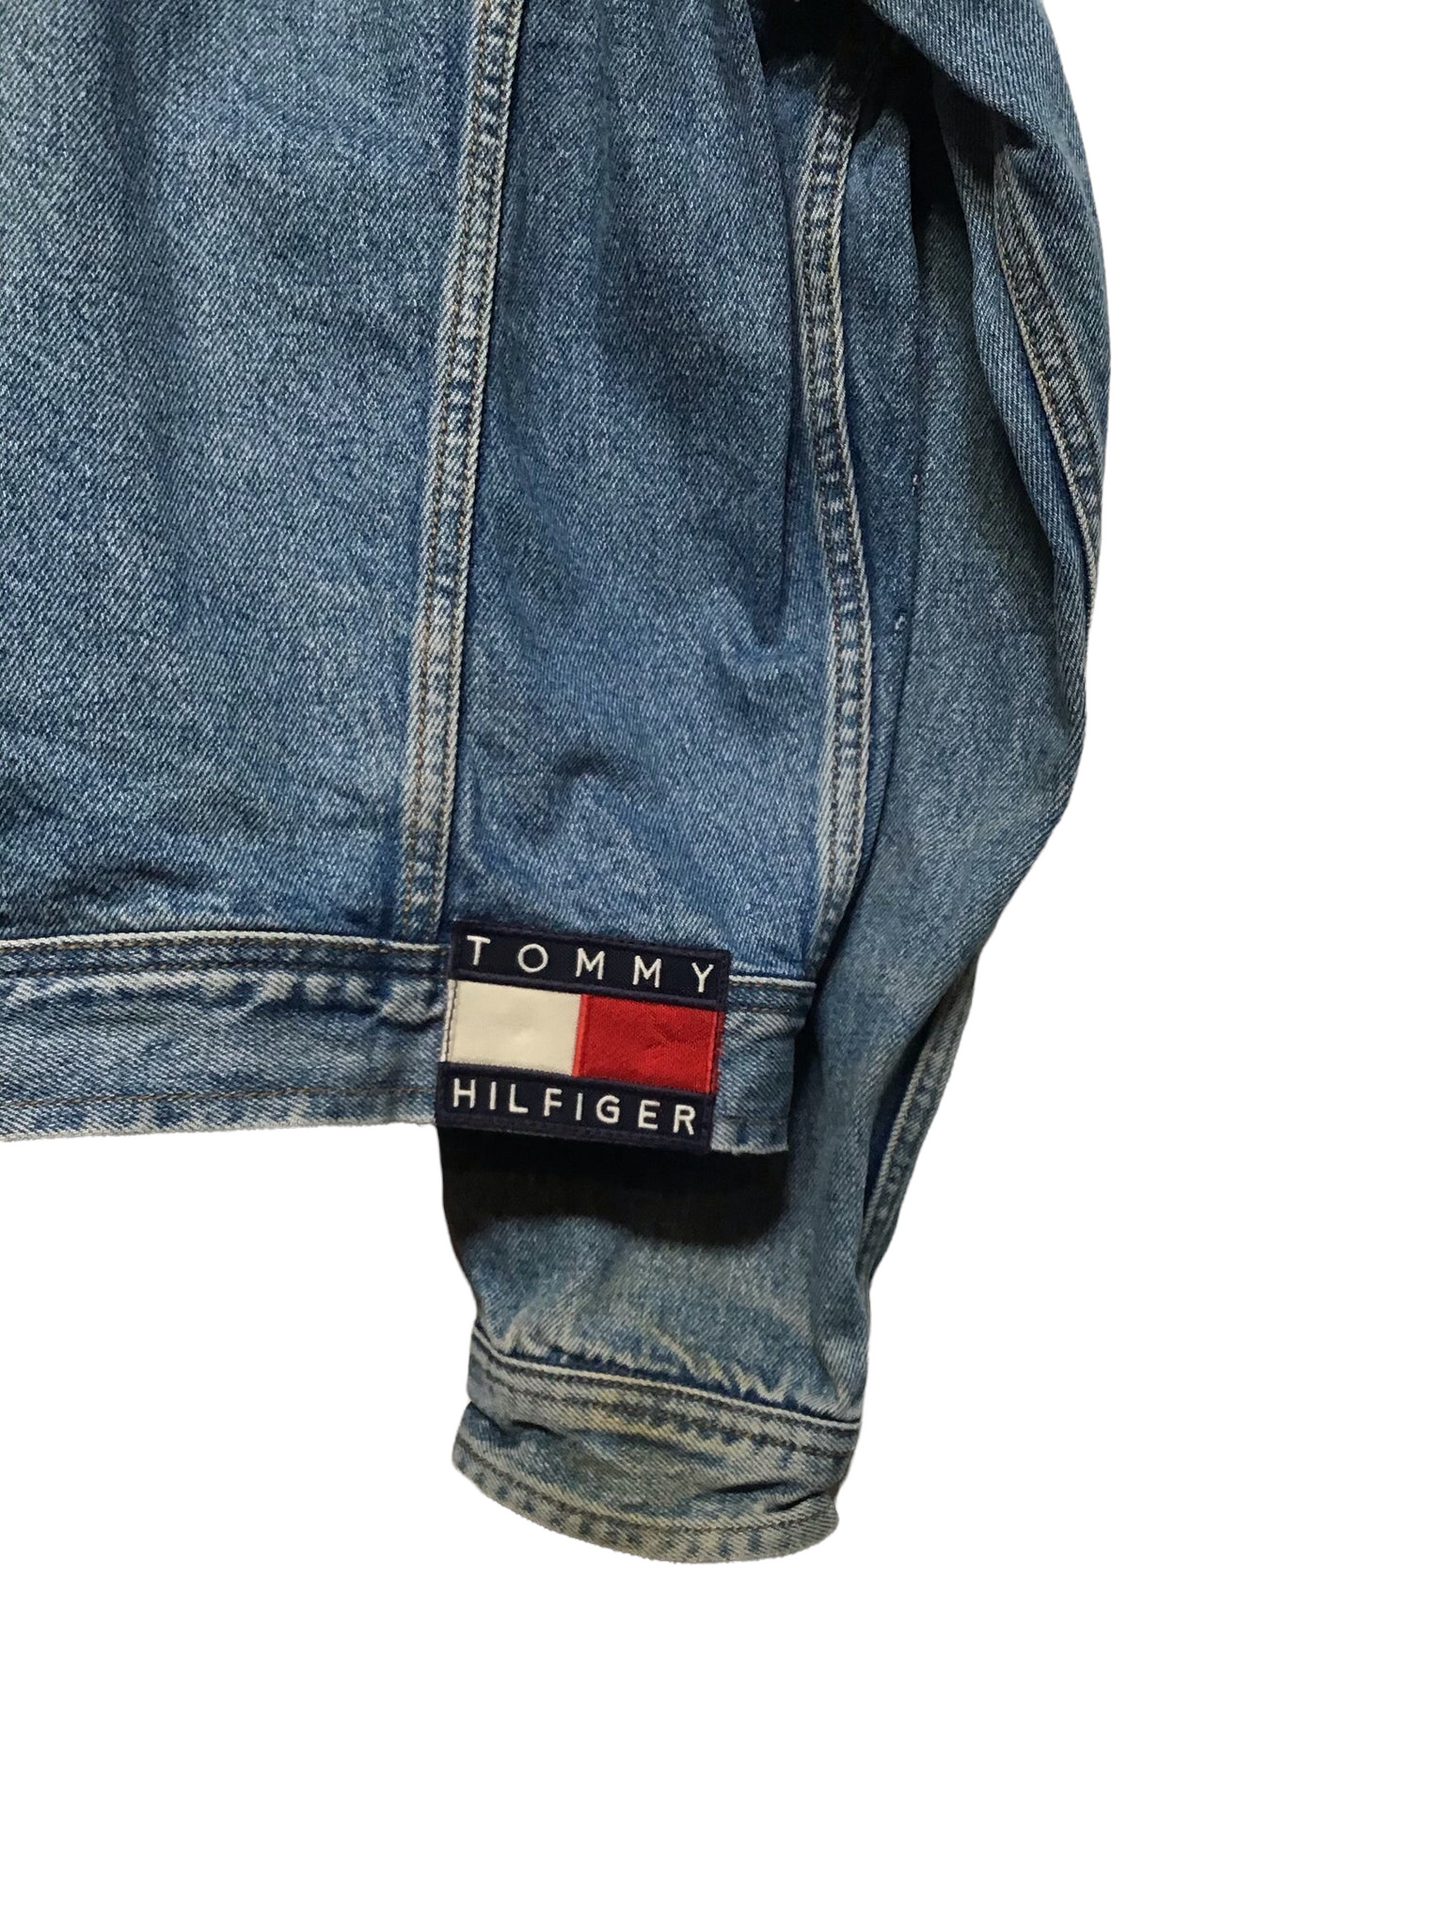 Tommy Hilfiger Denim Jacket (Size XL)